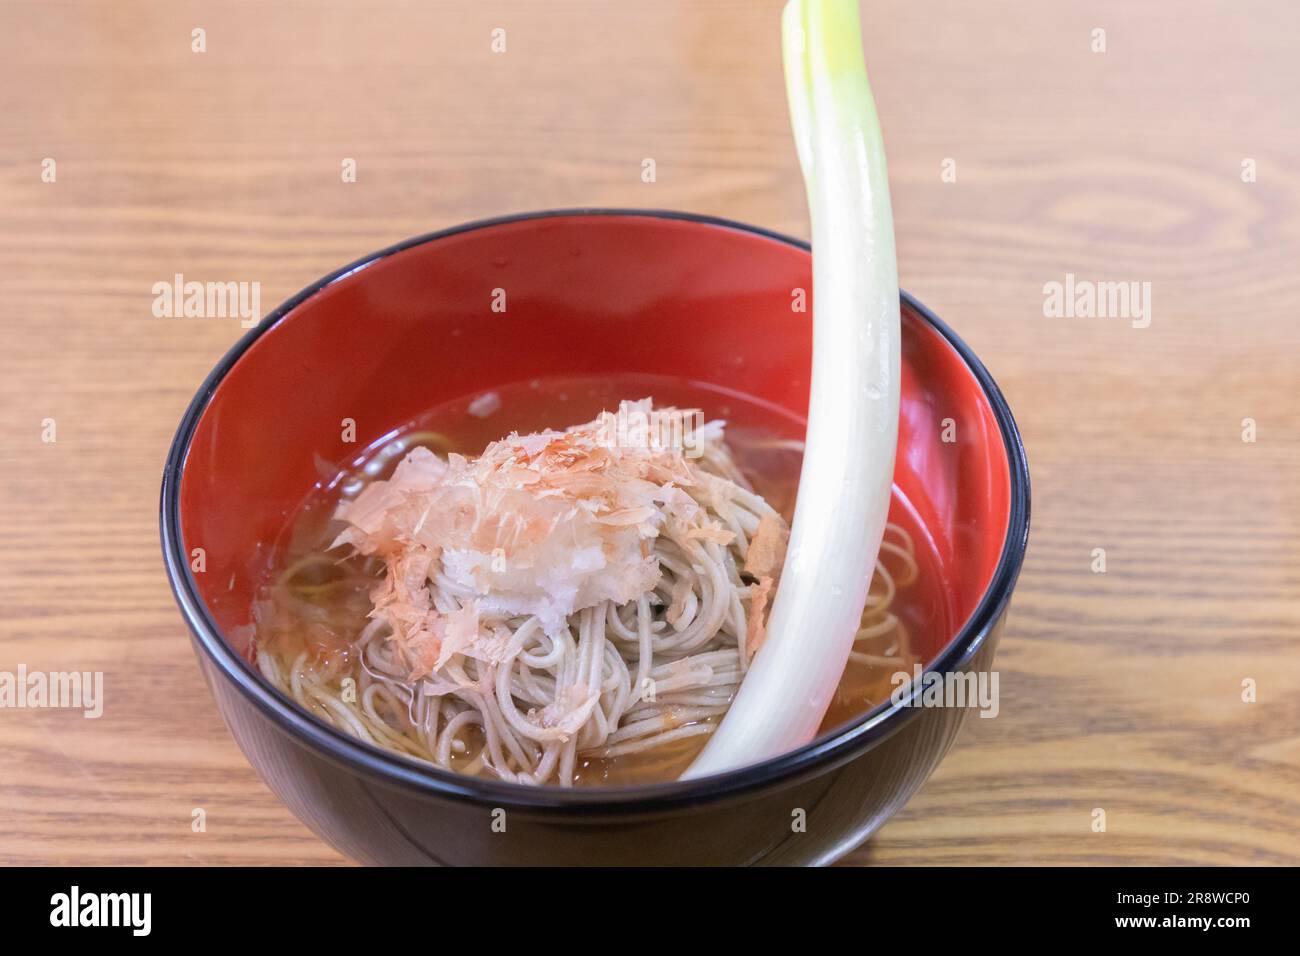 https://c8.alamy.com/comp/2R8WCP0/negi-soba-buckwheat-noodles-at-oouchi-inn-2R8WCP0.jpg